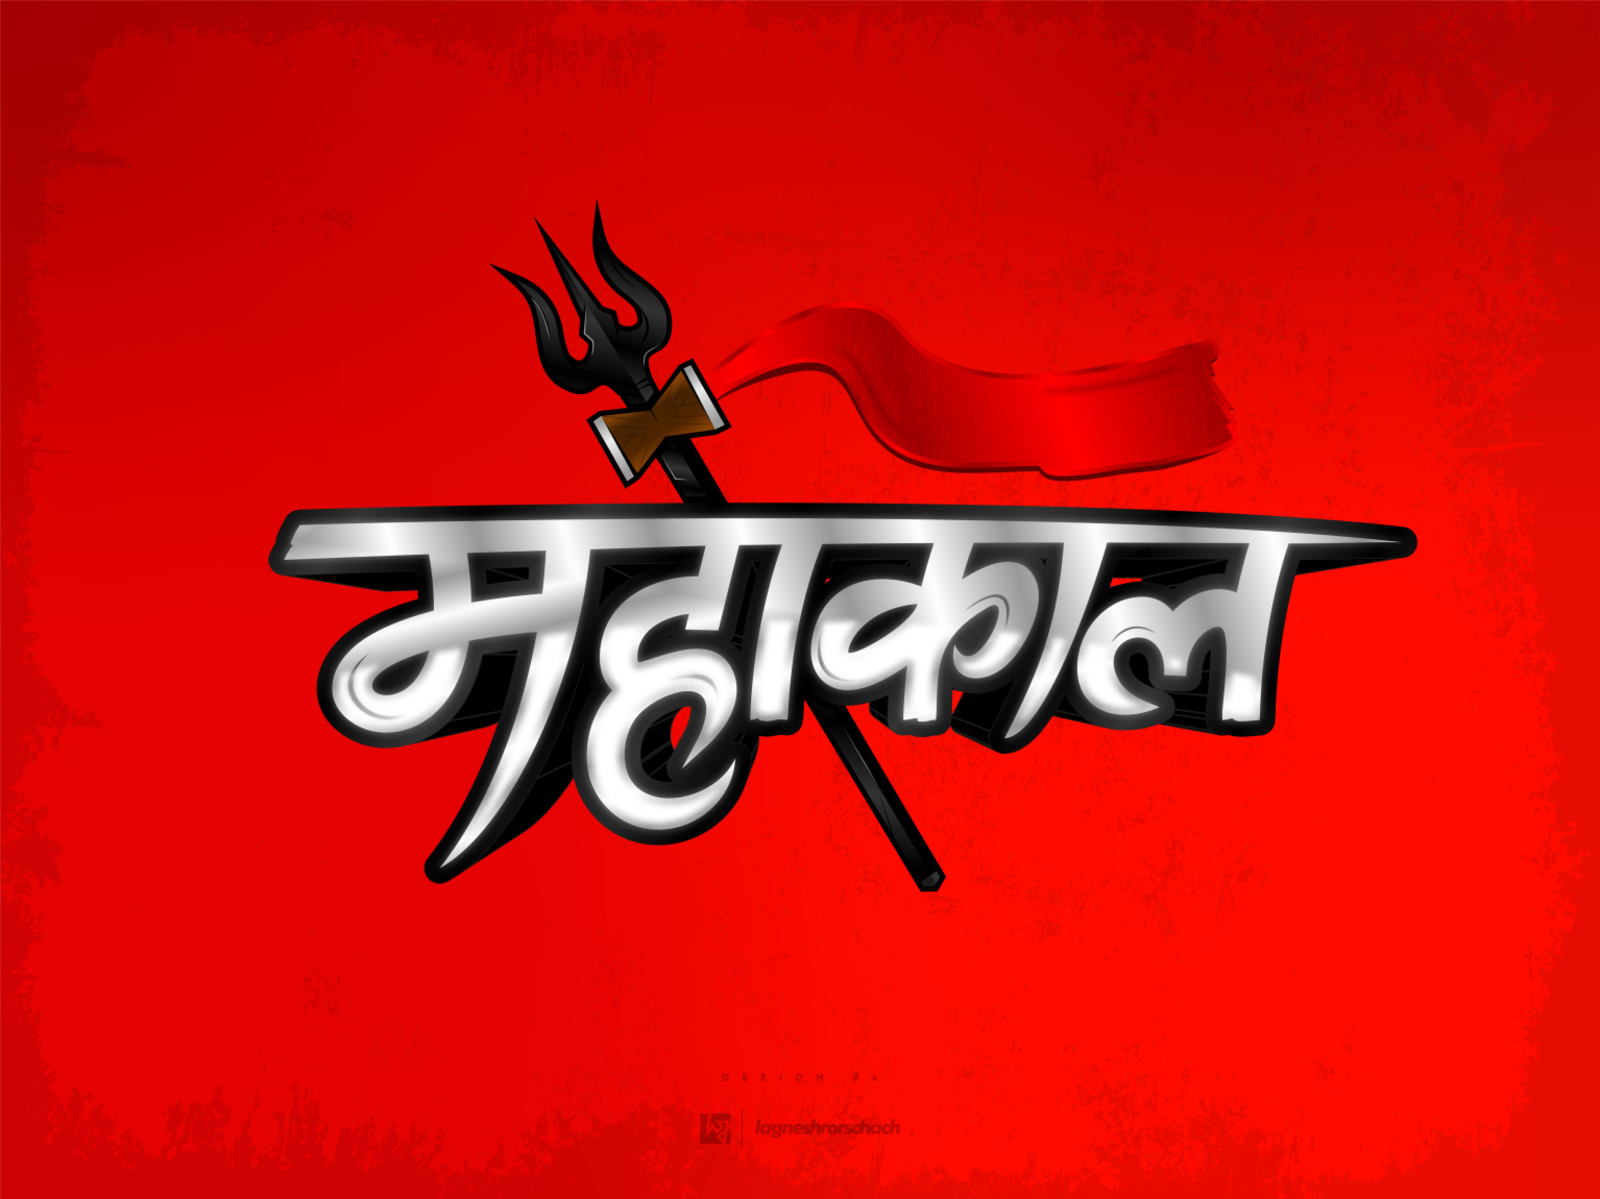 Mahakal Hindi Calligraphy Logo Lord Shiva Stock Illustration 2236565541 |  Shutterstock